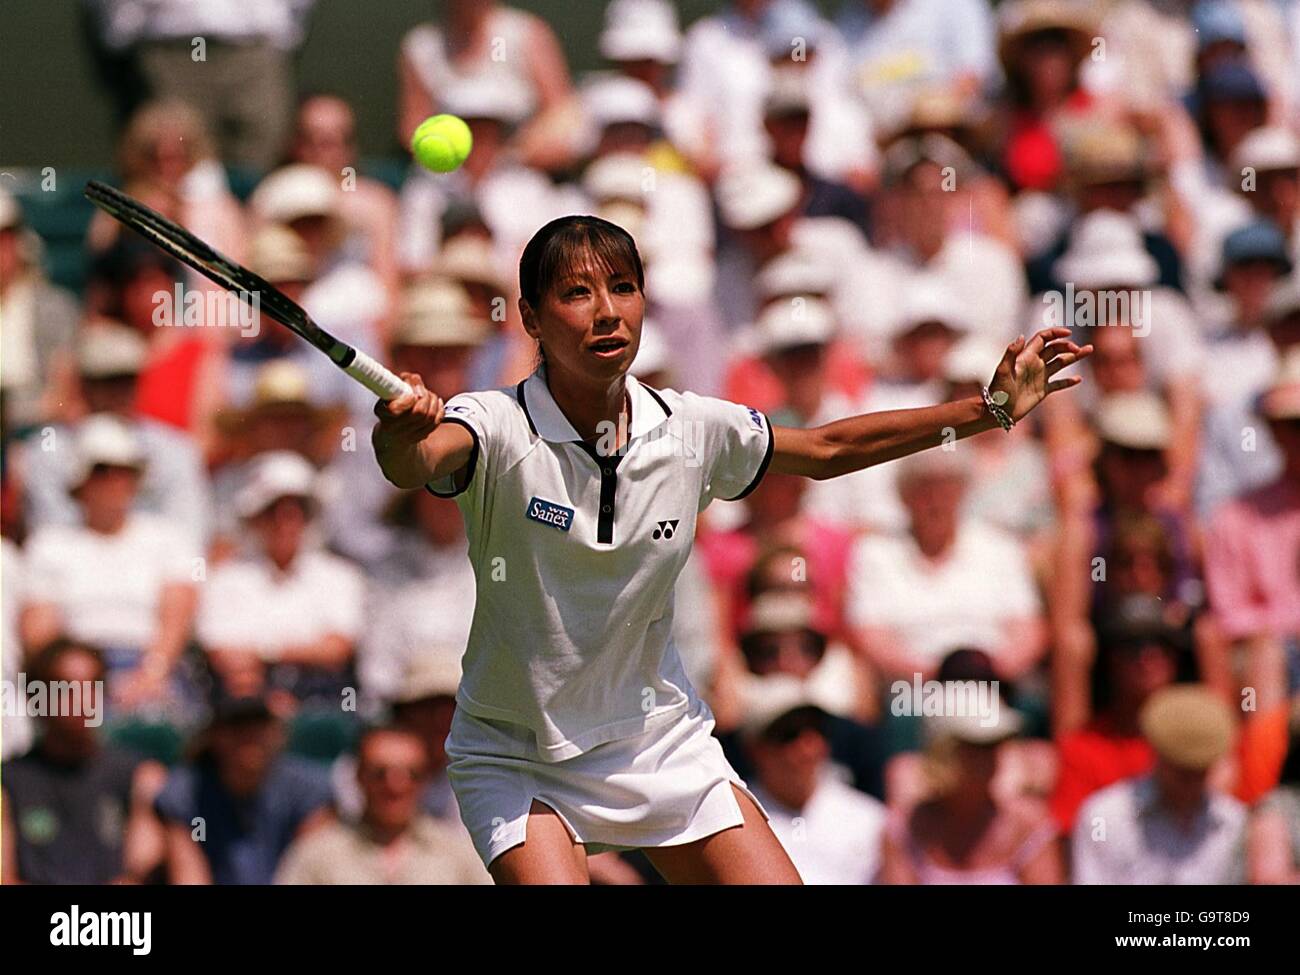 Tennis - Wimbledon Championships - First Round. Shinobu Asagoe in action against Venus Williams at Wimbledon. Stock Photo